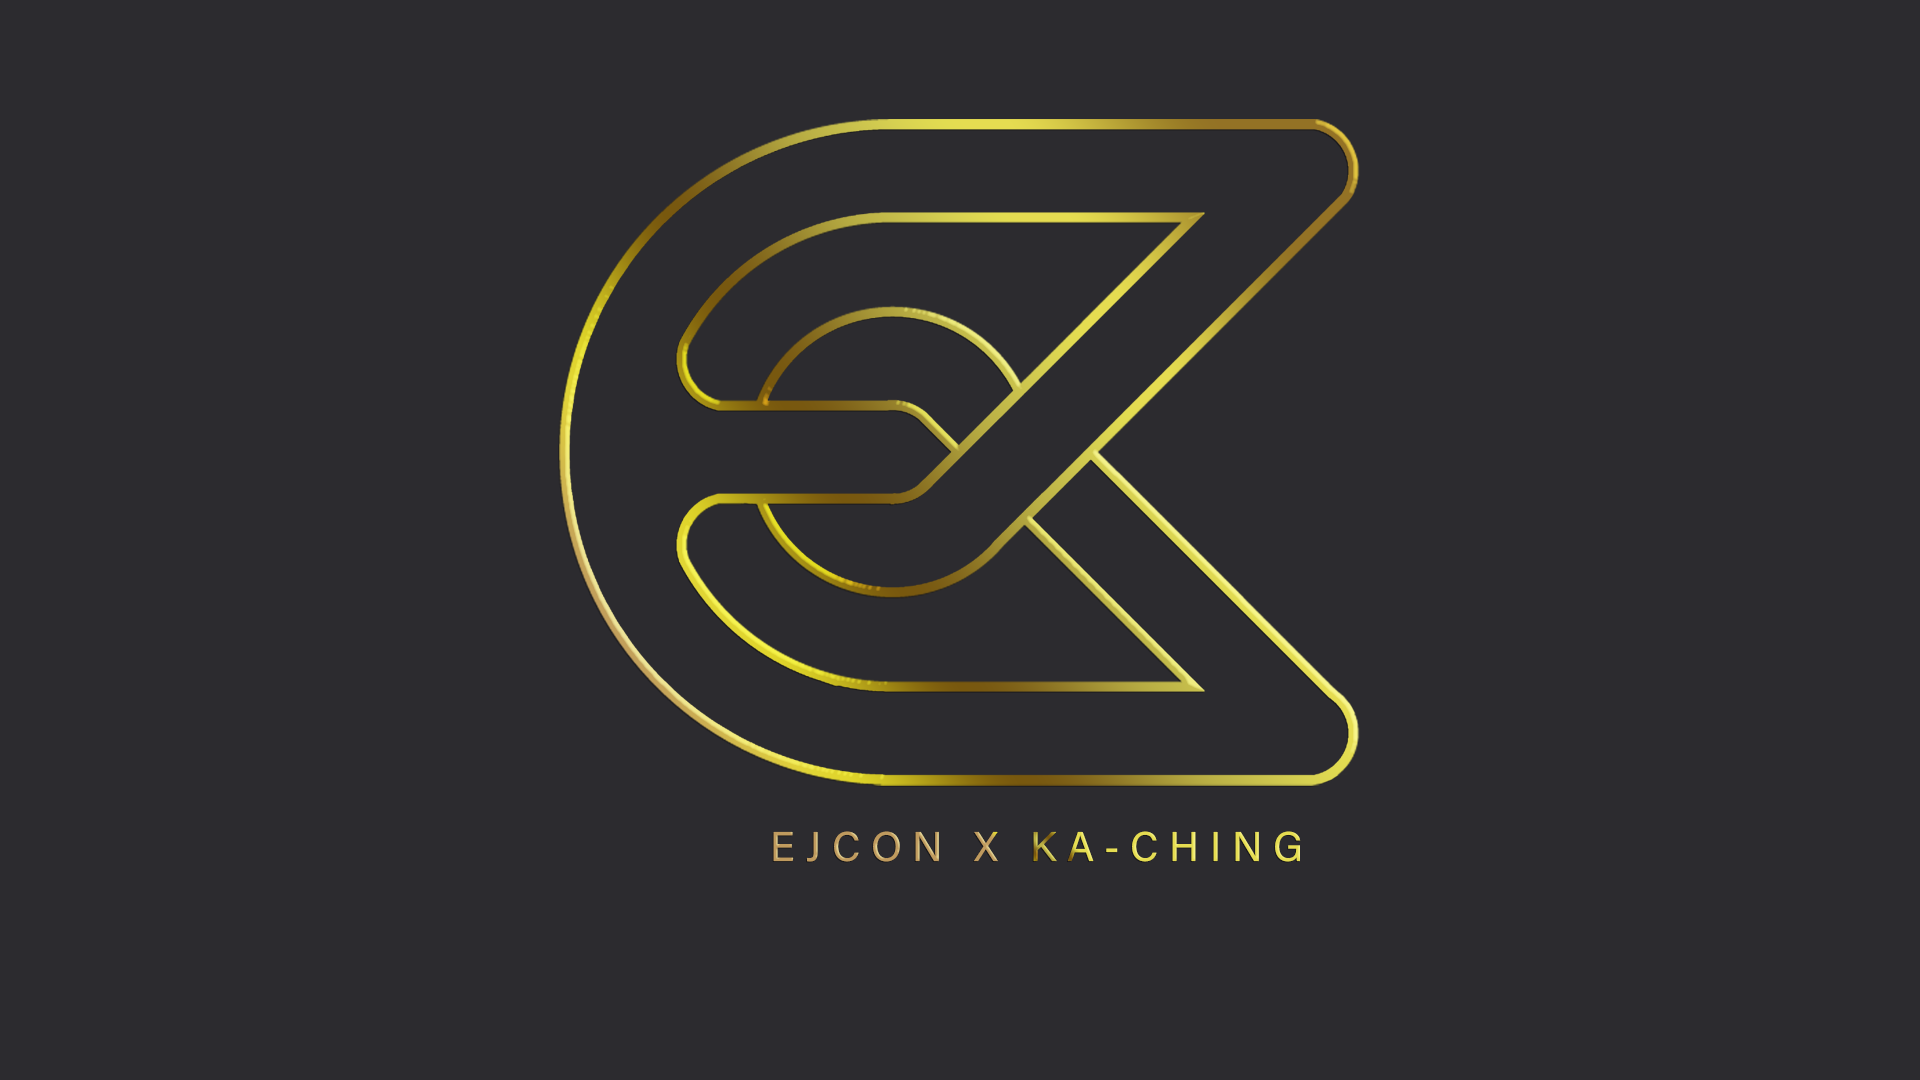 EJCON x Ka-ching 2022